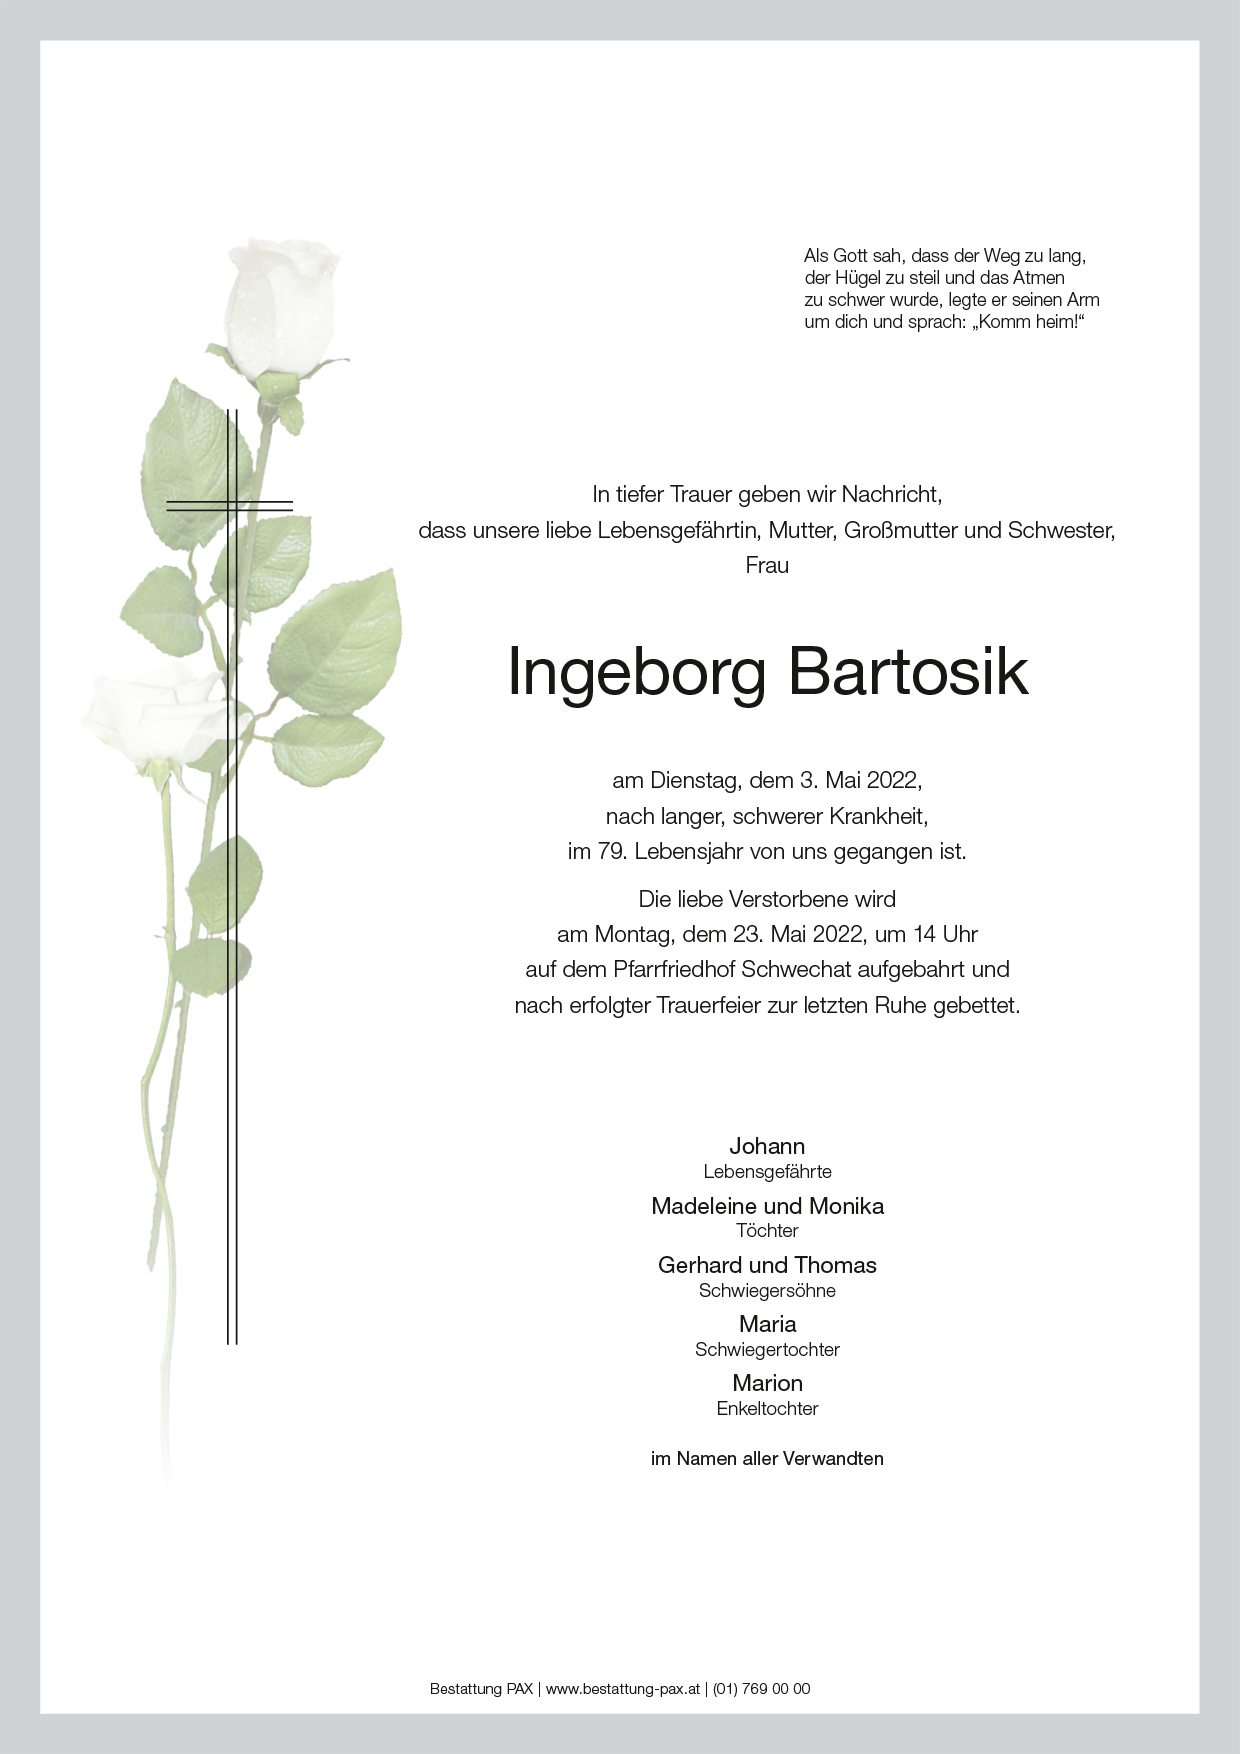 Ingeborg Bartosik